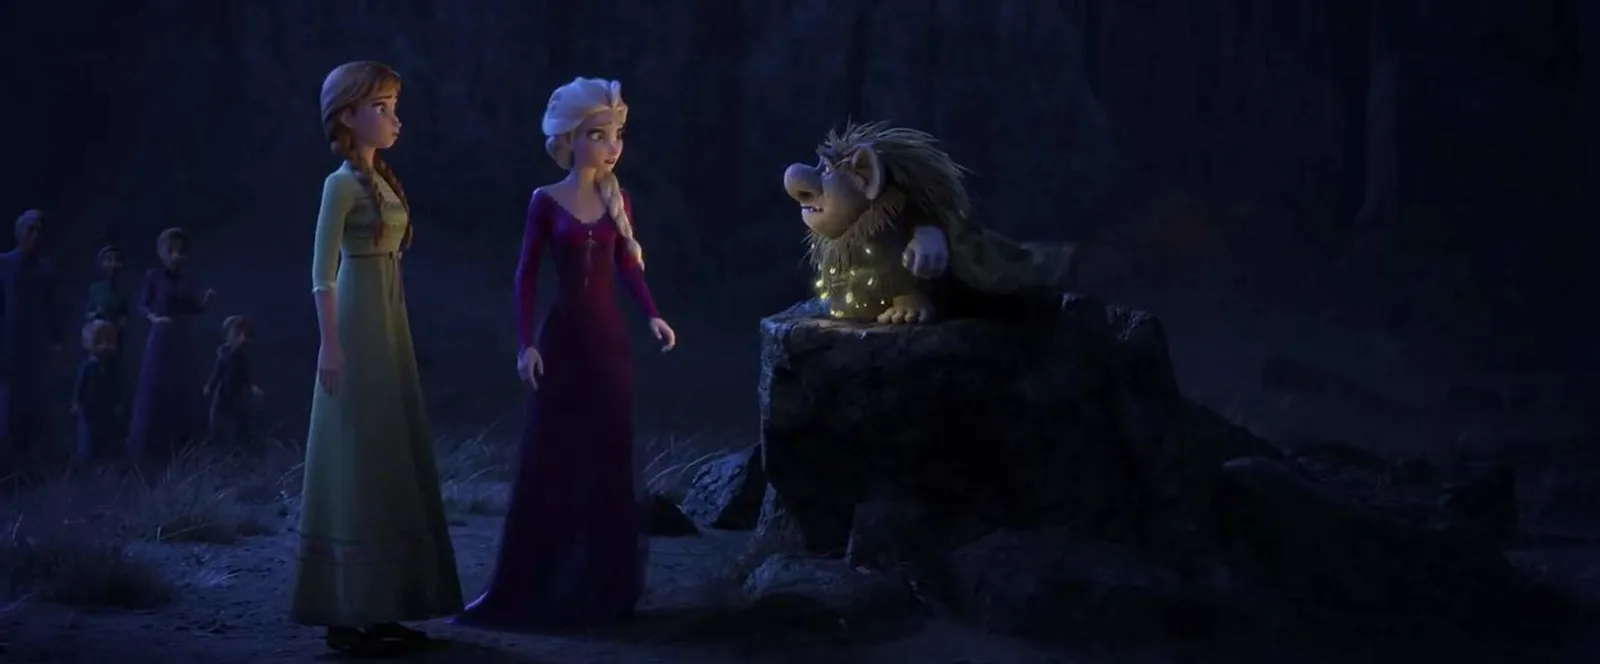 Trailer Kedua Rilis, Penggalan Cerita Frozen 2 Bikin Makin Penasaran